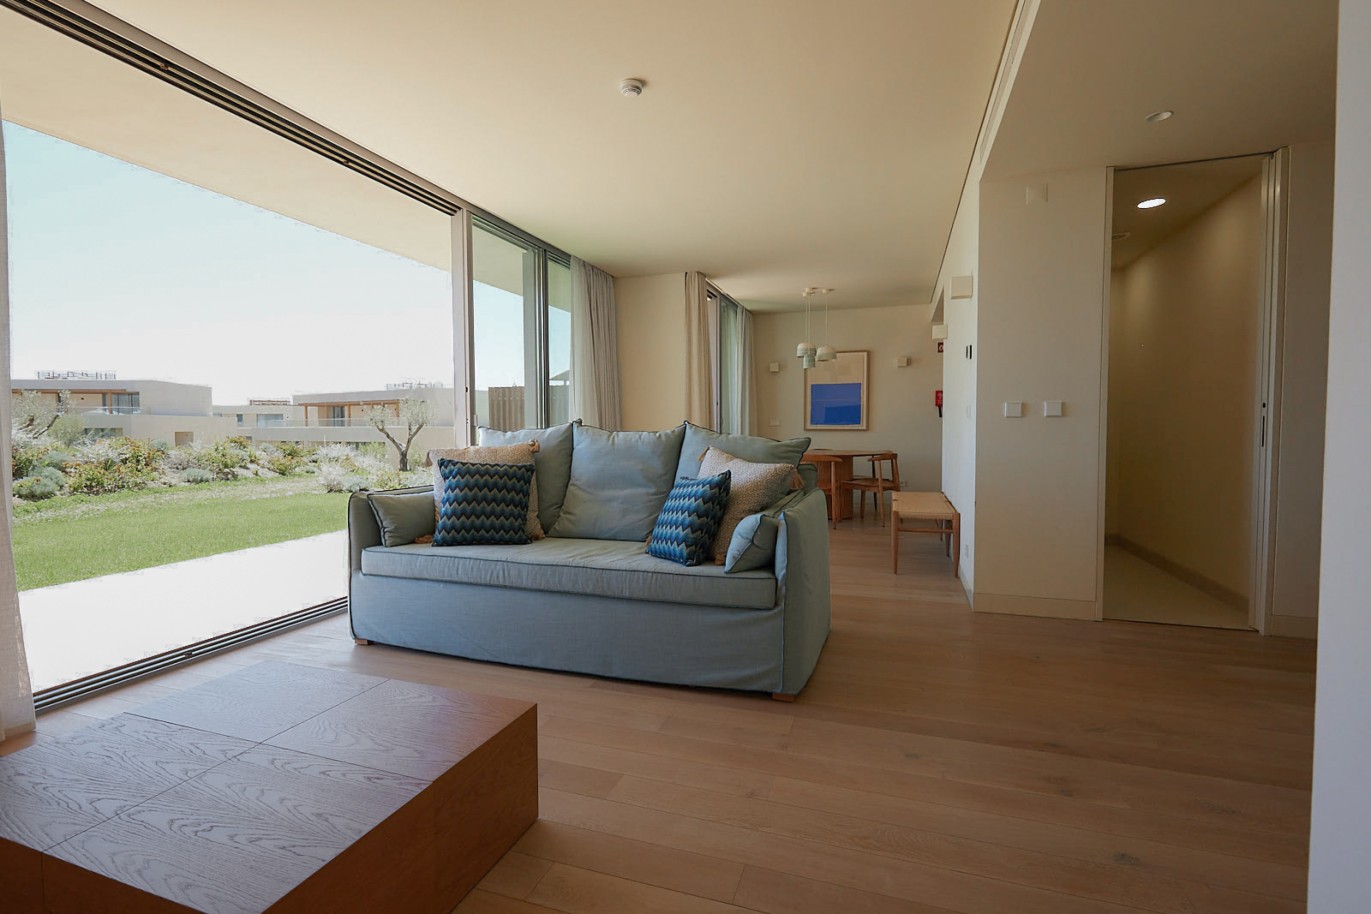 2 bedroom apartment in resort, for sale in Porches, Algarve_230673